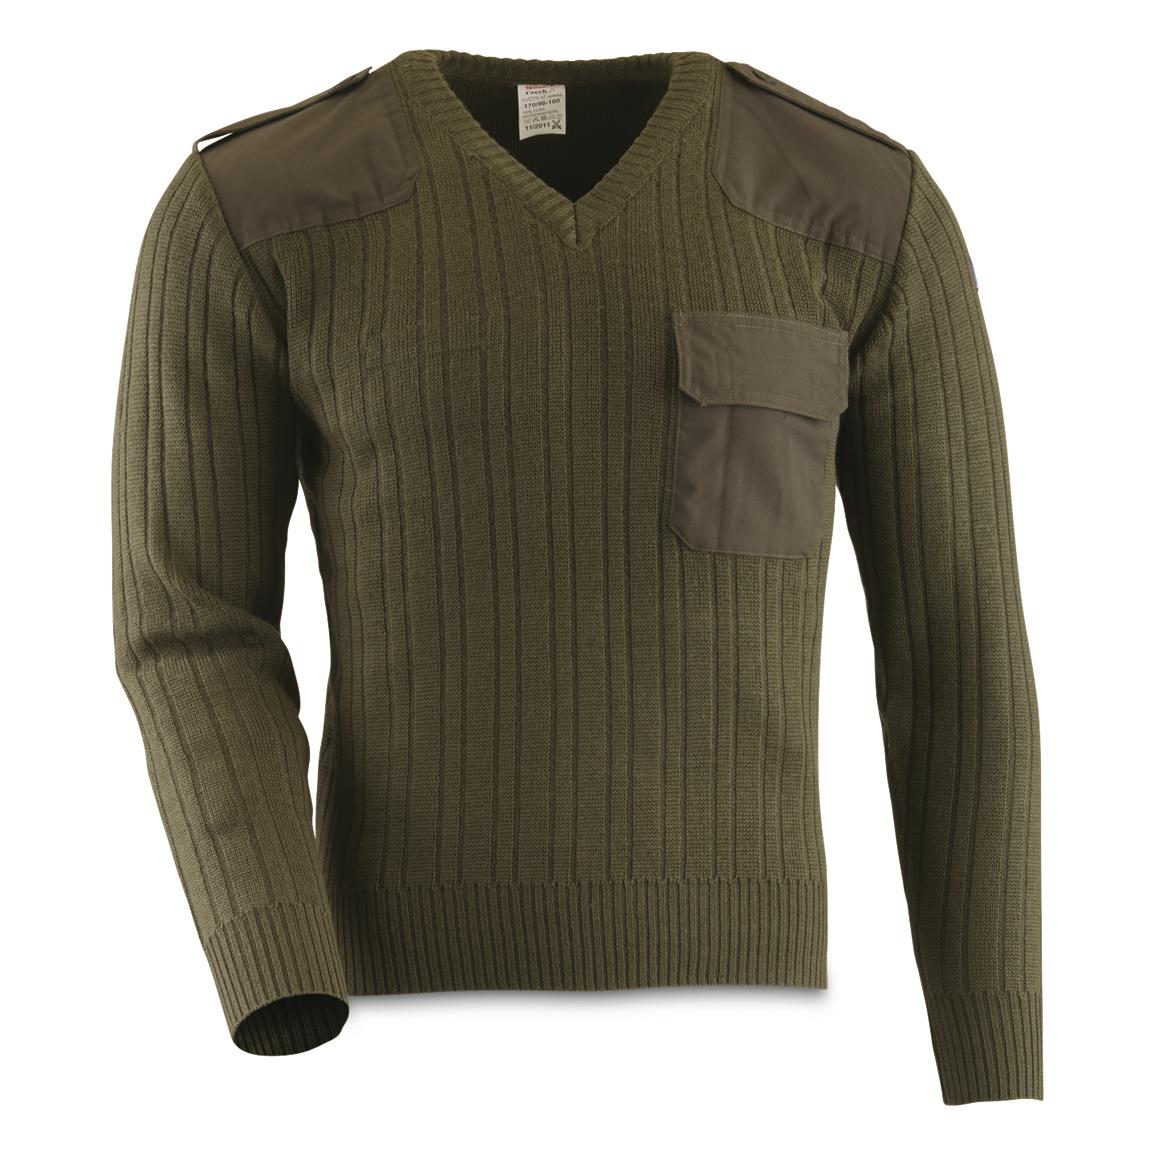 Czech Republic Military Surplus Wool Blend V-Neck Commando Sweater, Like New, Olive Drab